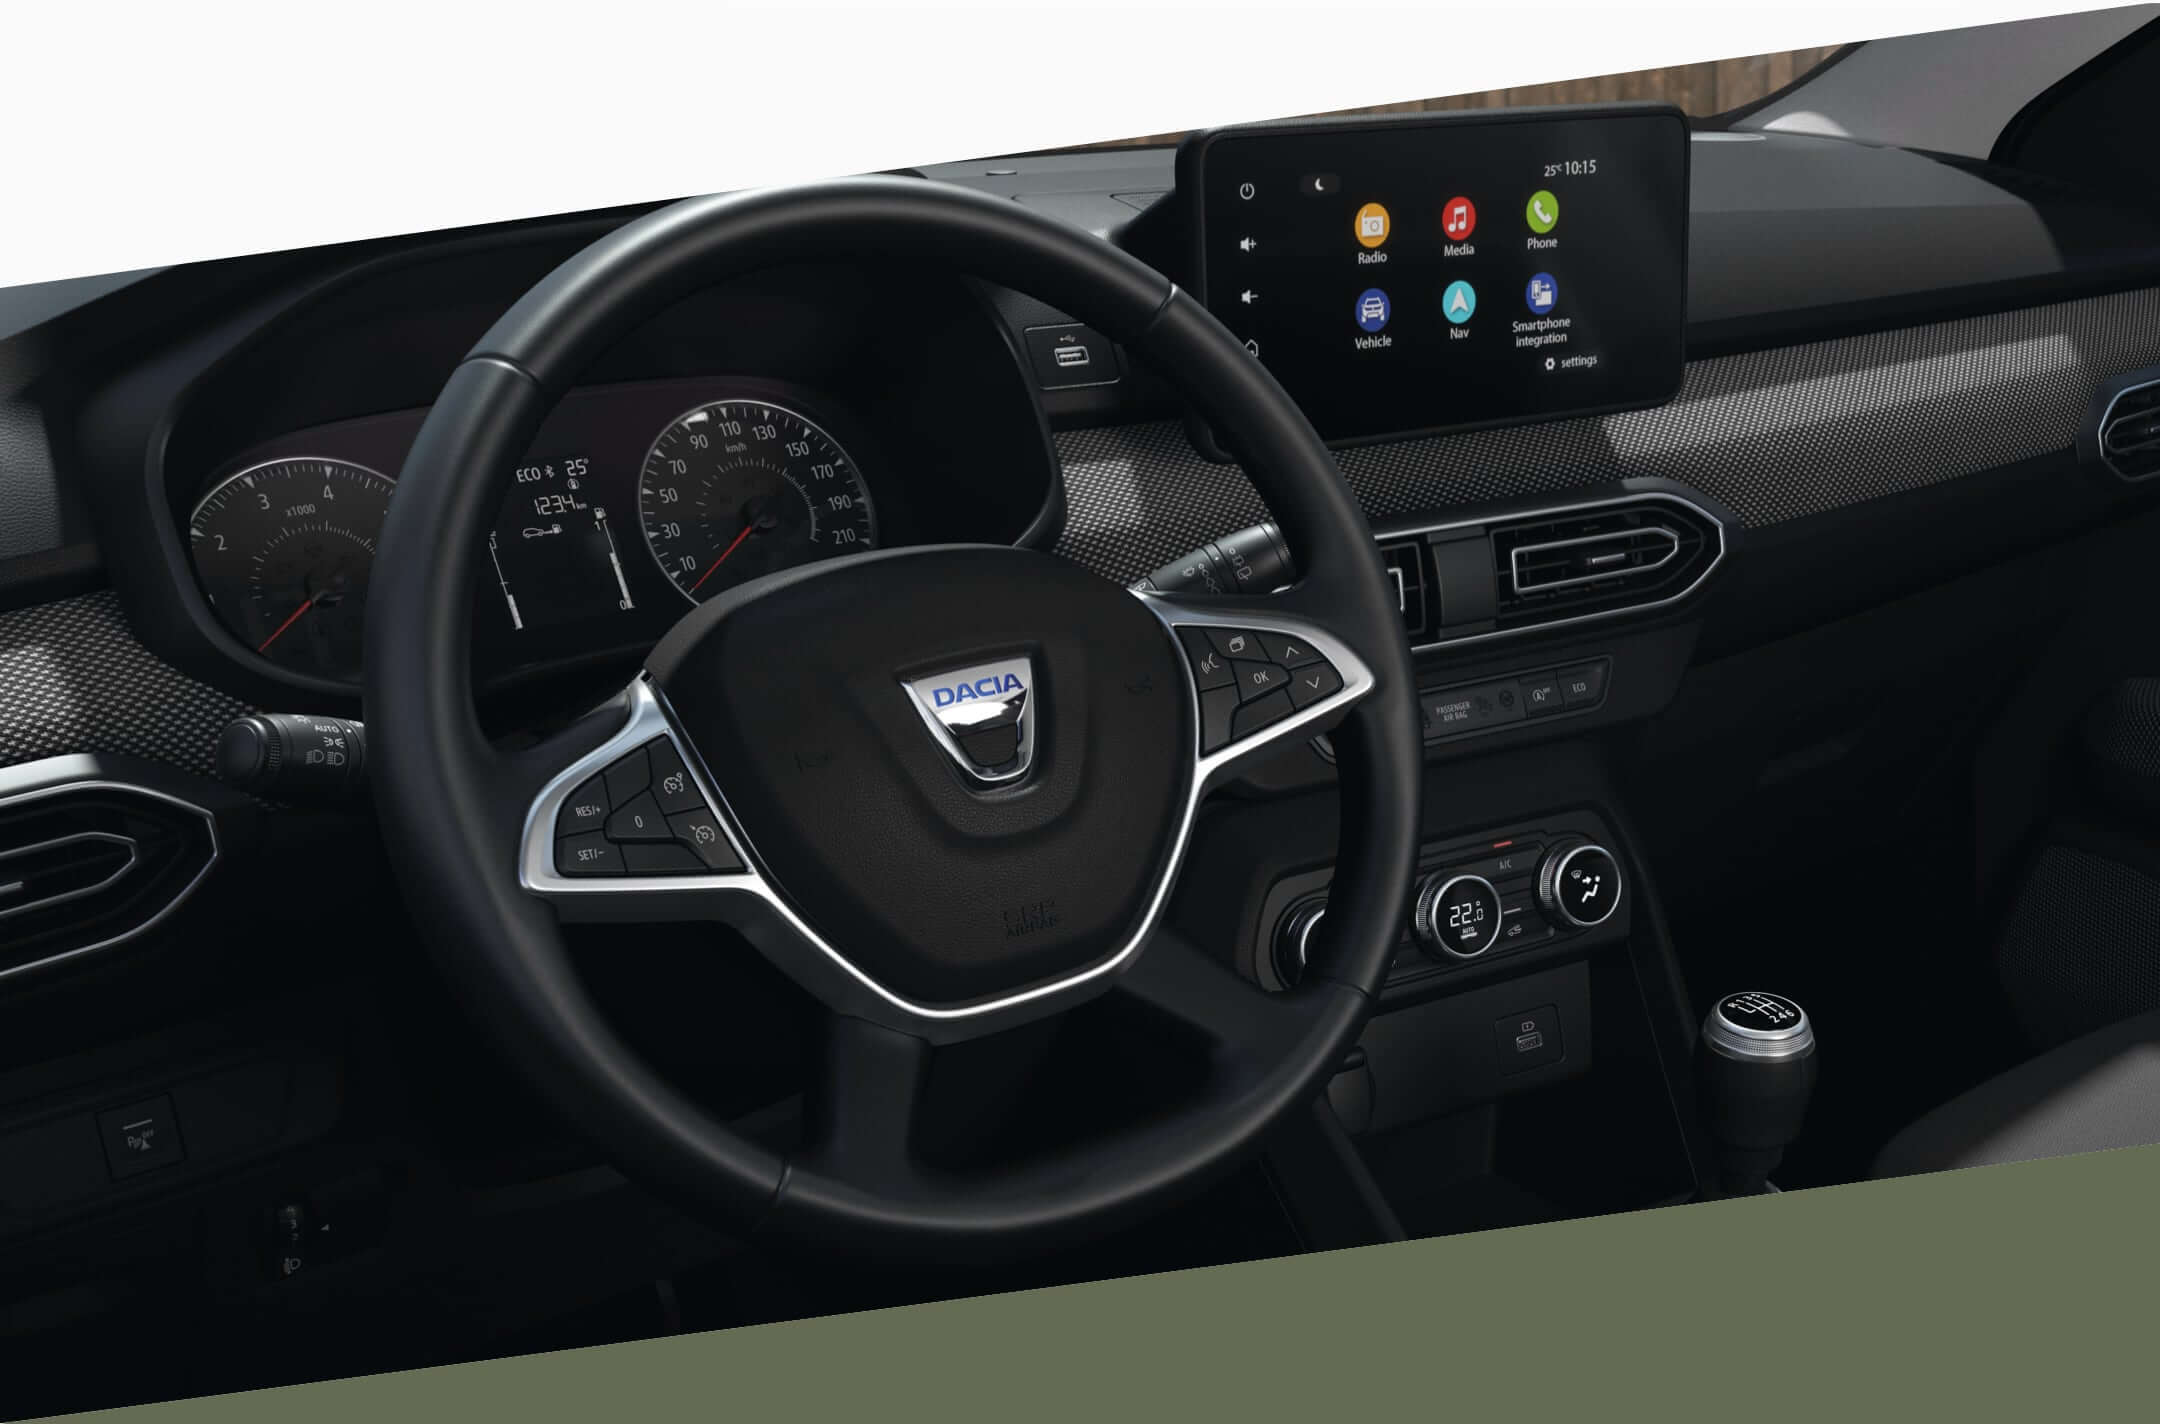 Dacia Sandero dashboard